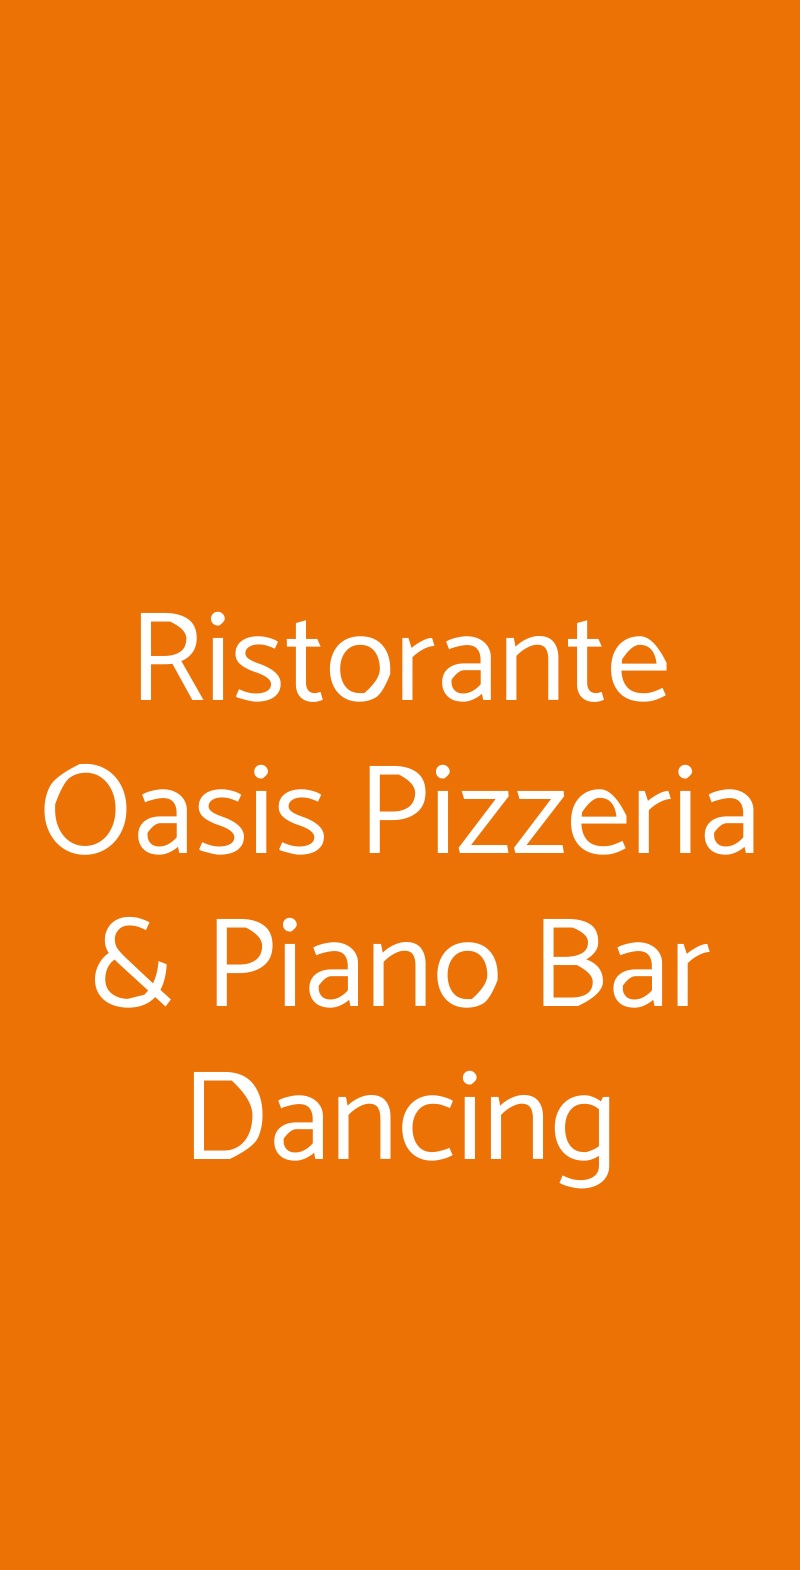 Ristorante Oasis Pizzeria & Piano Bar Dancing Forio menù 1 pagina